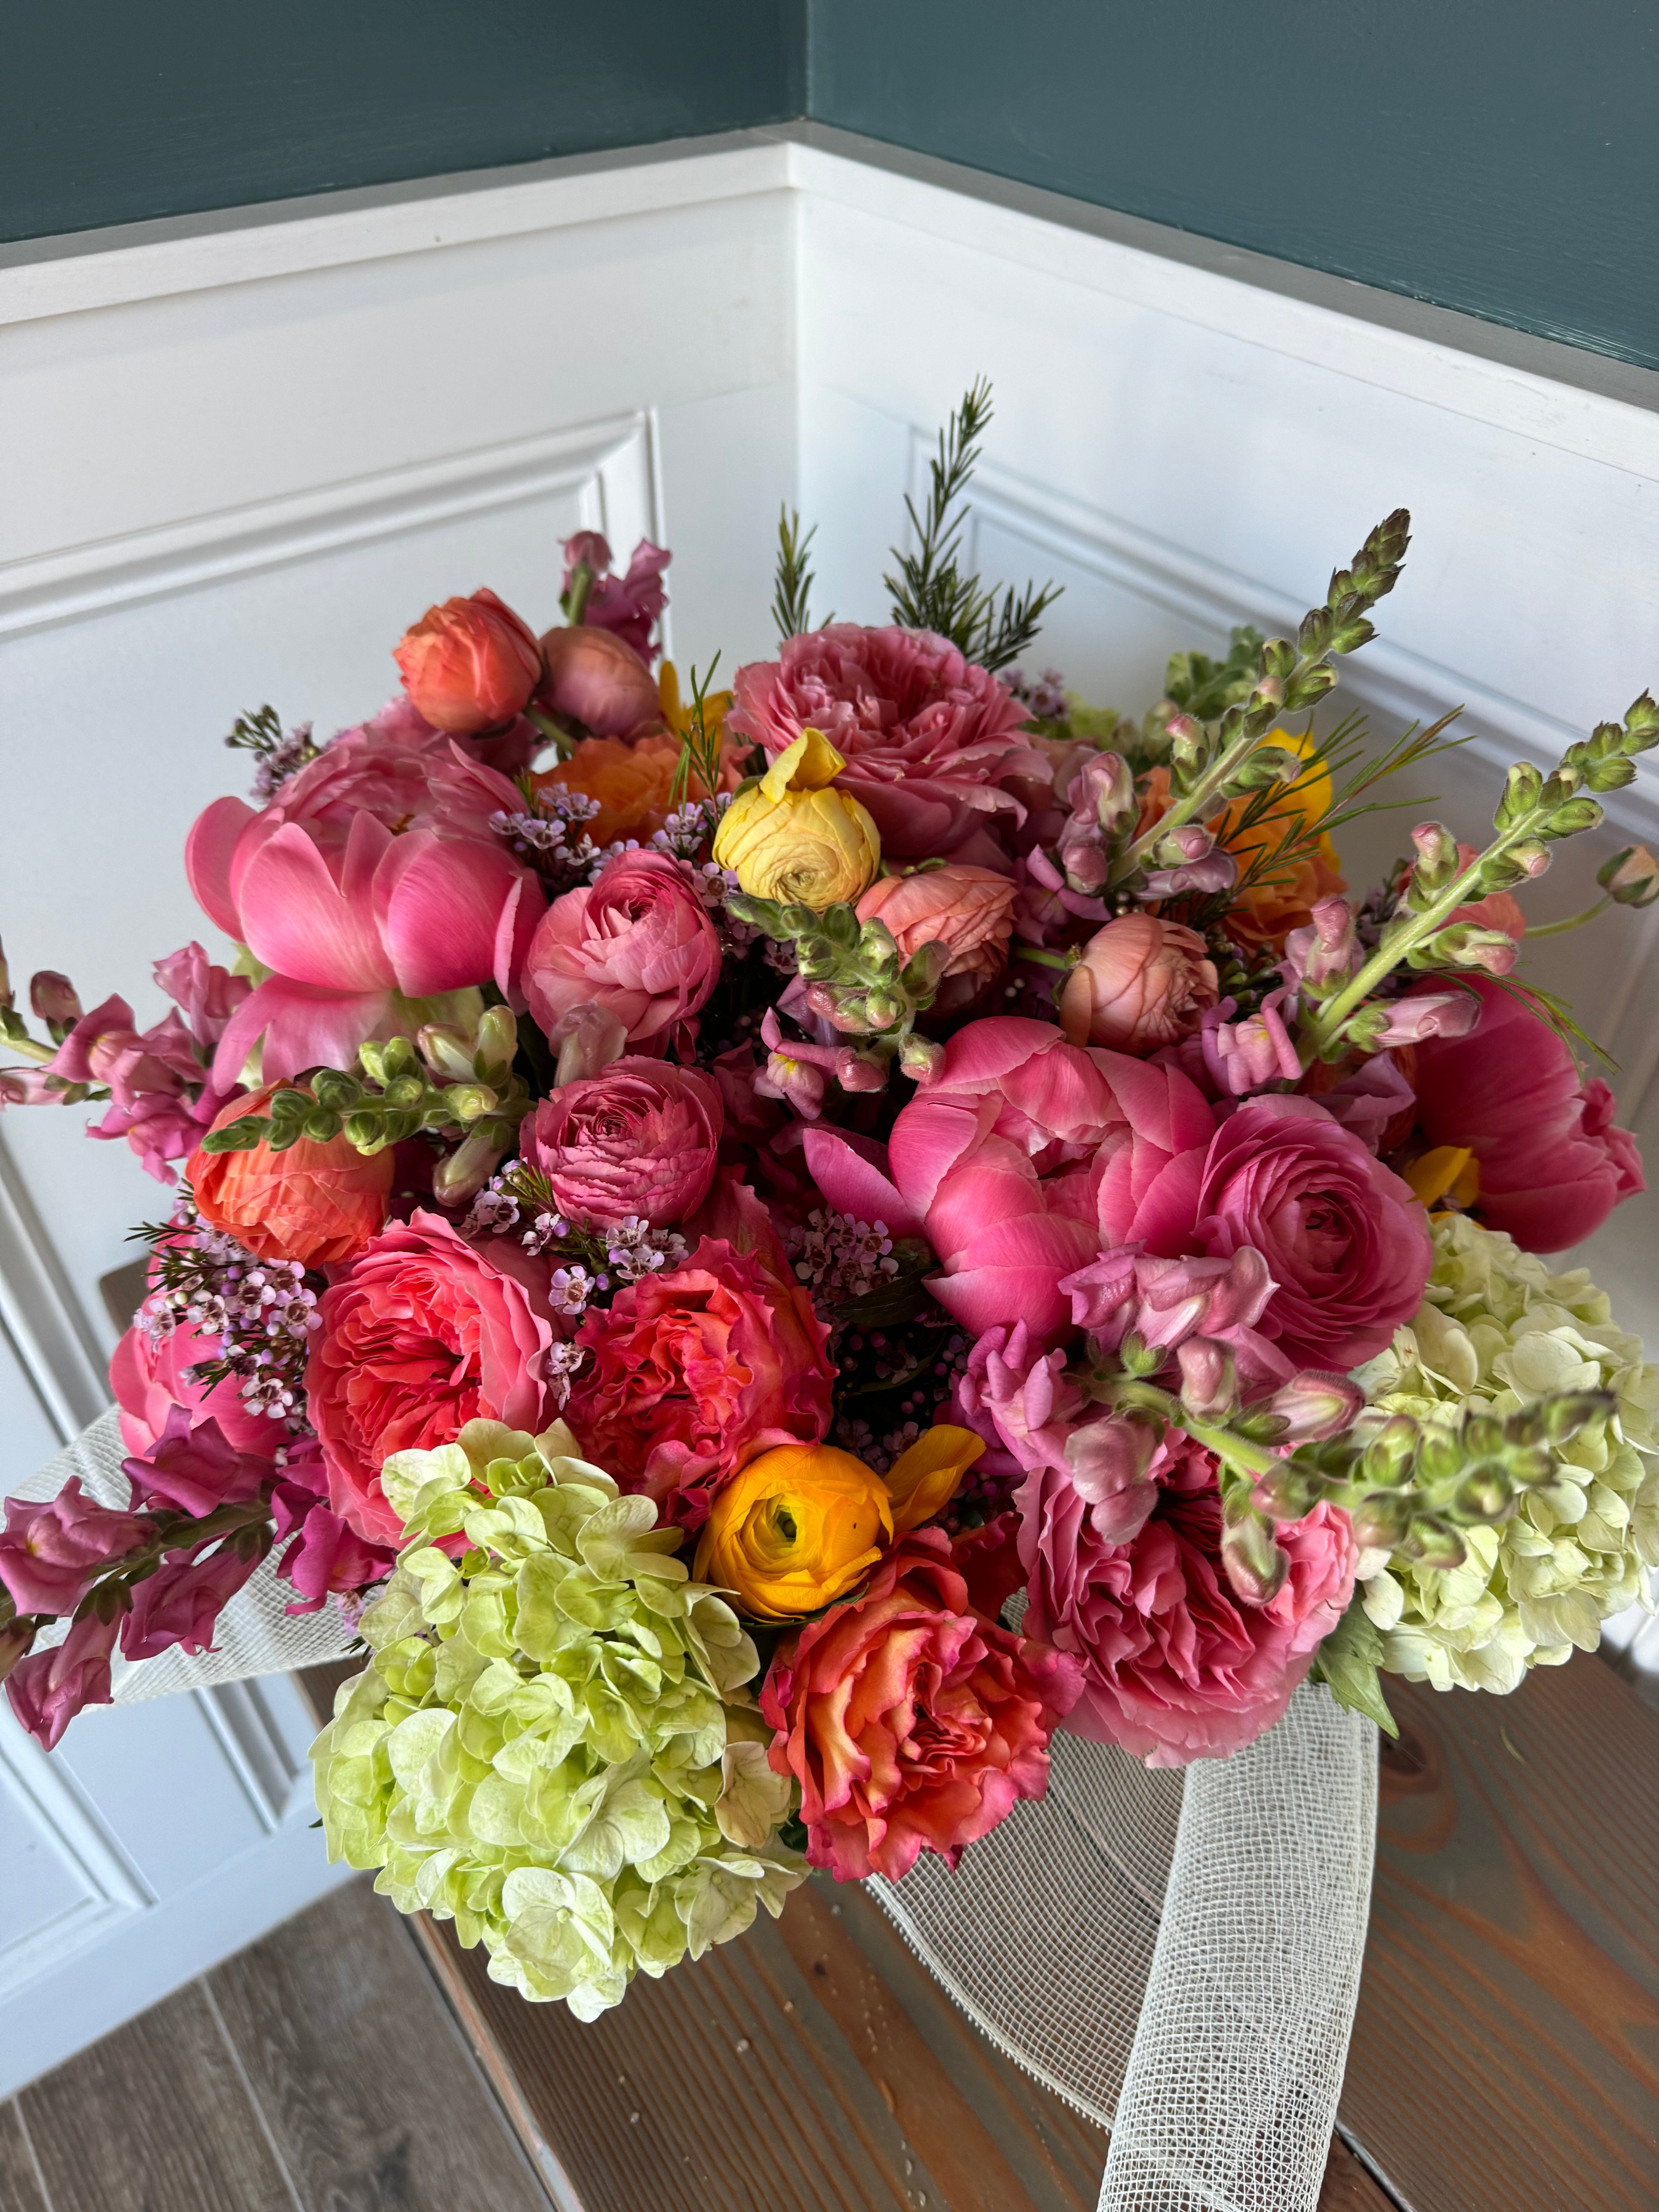 Mother's Day Arrangement in Vase: Over The Top